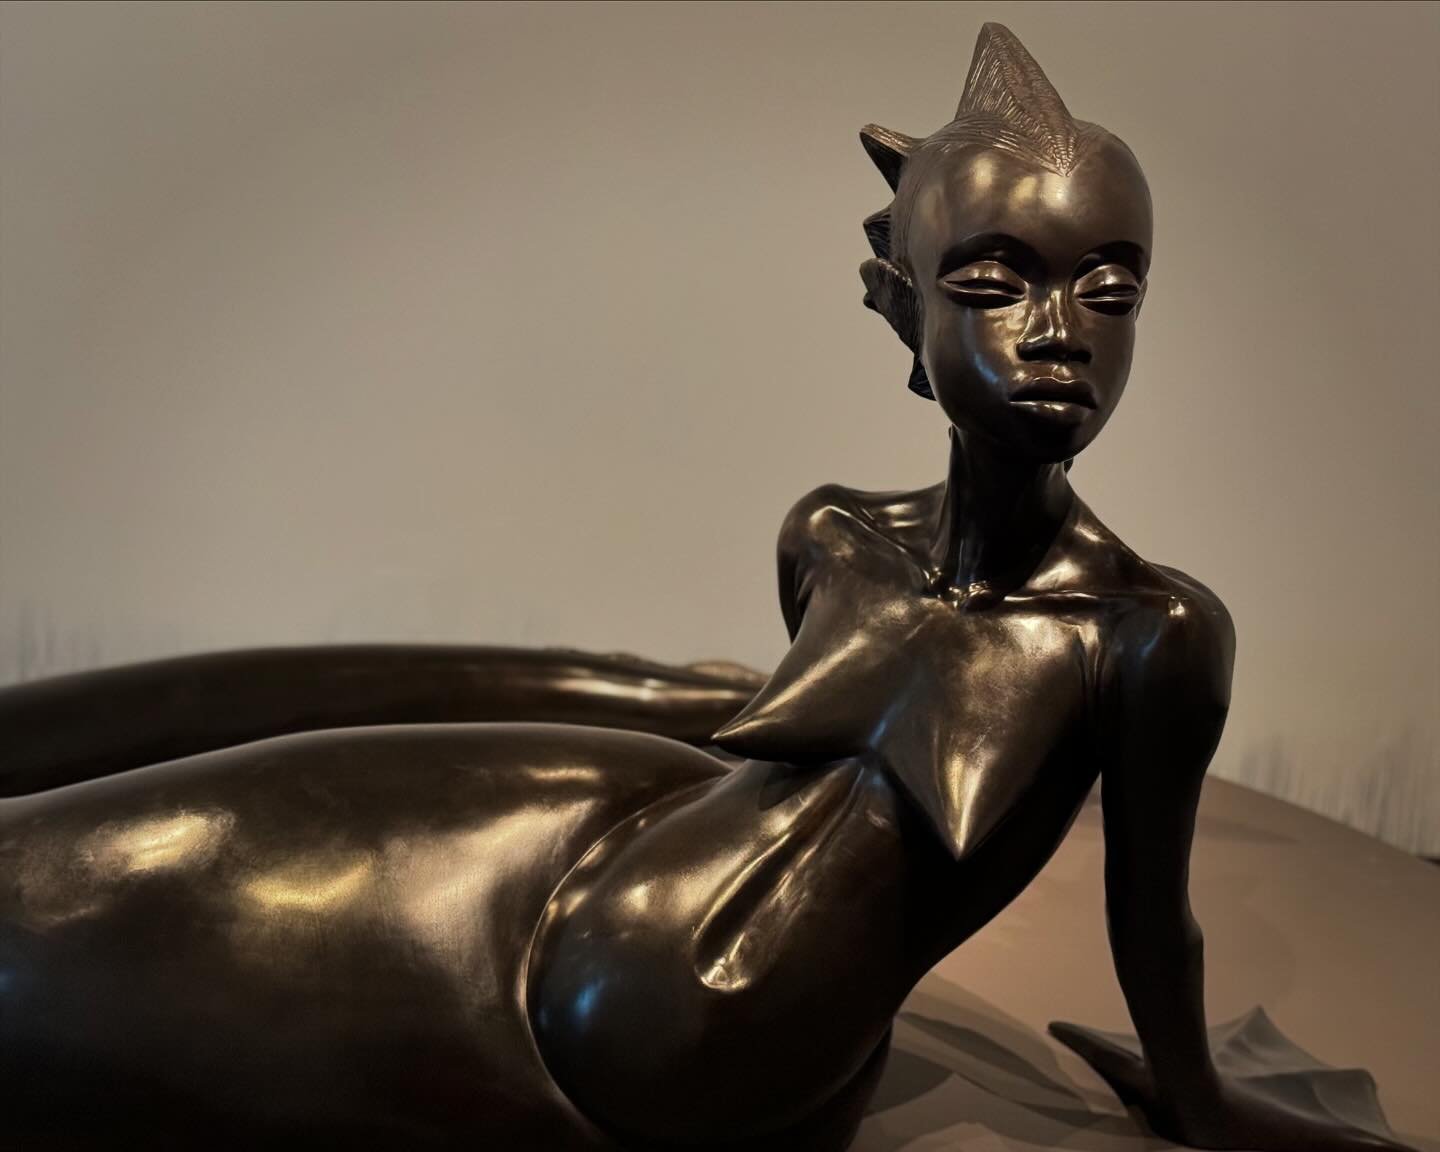 More surreal, dramatic creations from Wangechi Mutu&rsquo;s powerful show at New Orleans Museum of Art. 
.
.
.
@neworleansmuseumofart @wangechistudio @newmuseum @fordfoundation #explorenoma #wangechimutu #art #sculpture #neworleans #nolalove #onlyinn